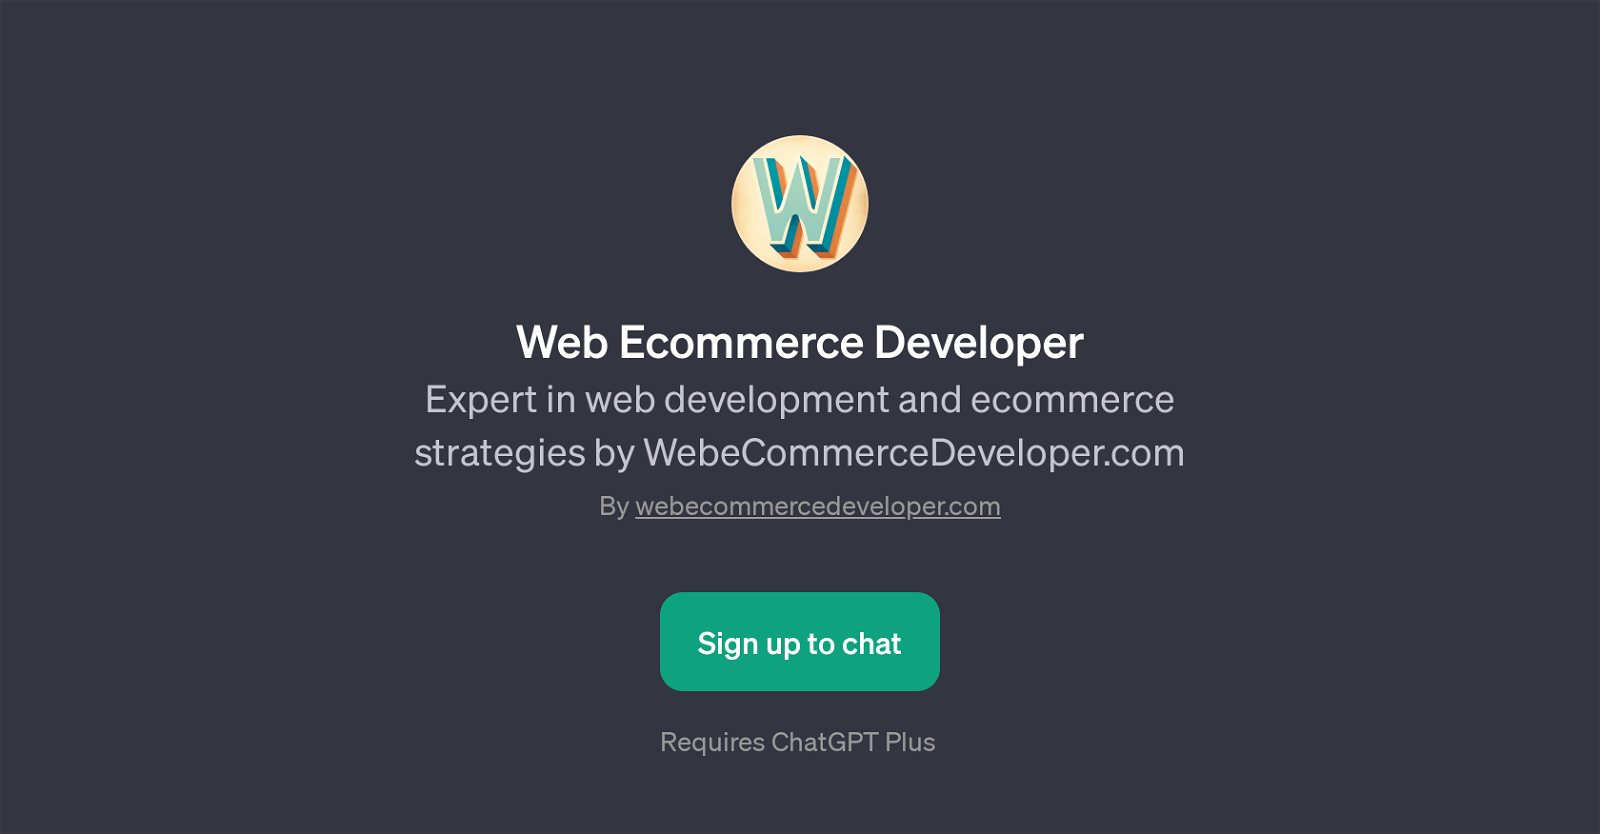 Web Ecommerce Developer website